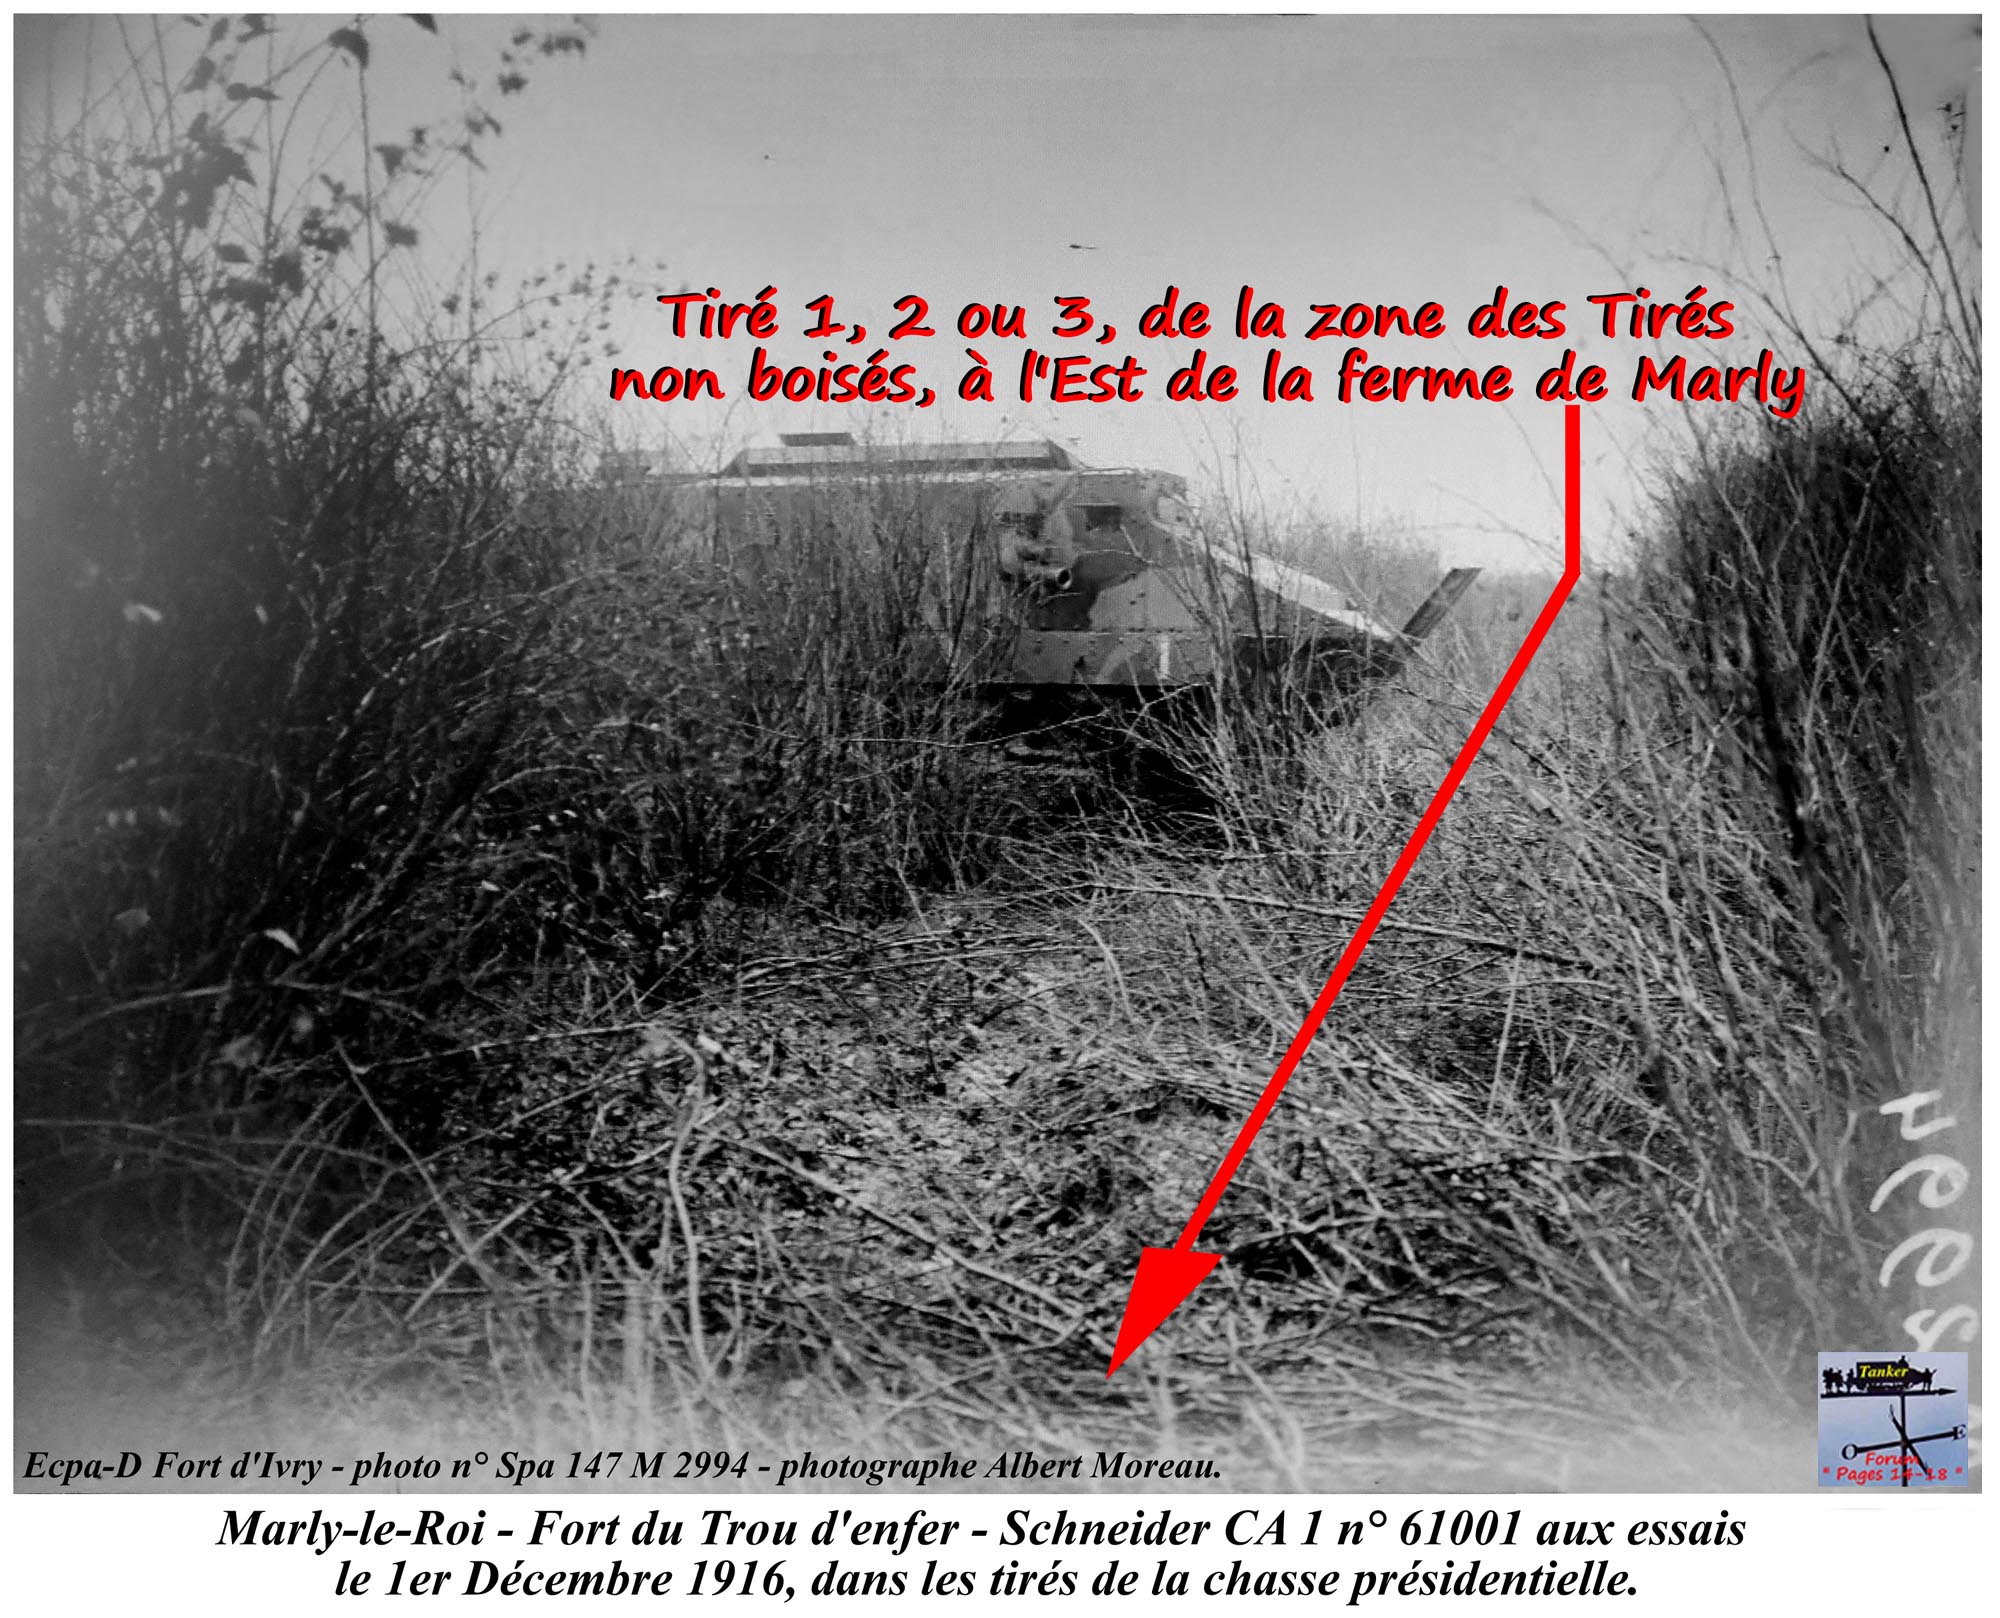 14 - Dans les tirés - Schneider M1 - n° 61001 (01a1).jpg